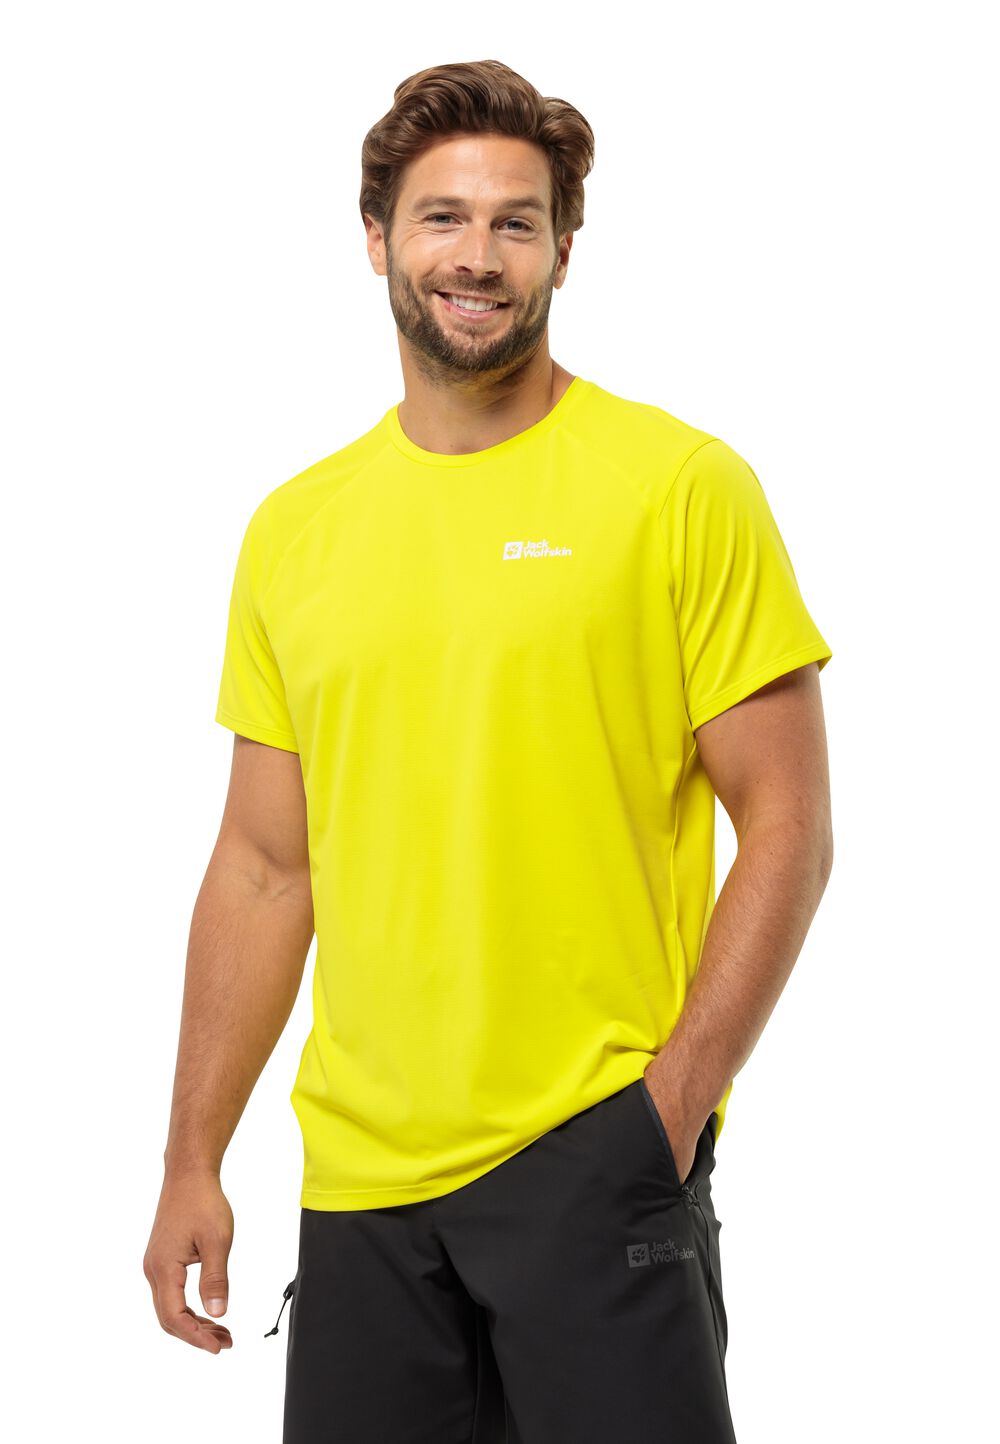 Jack Wolfskin Prelight Trail T-Shirt Men Functioneel shirt Heren M oranje firefly